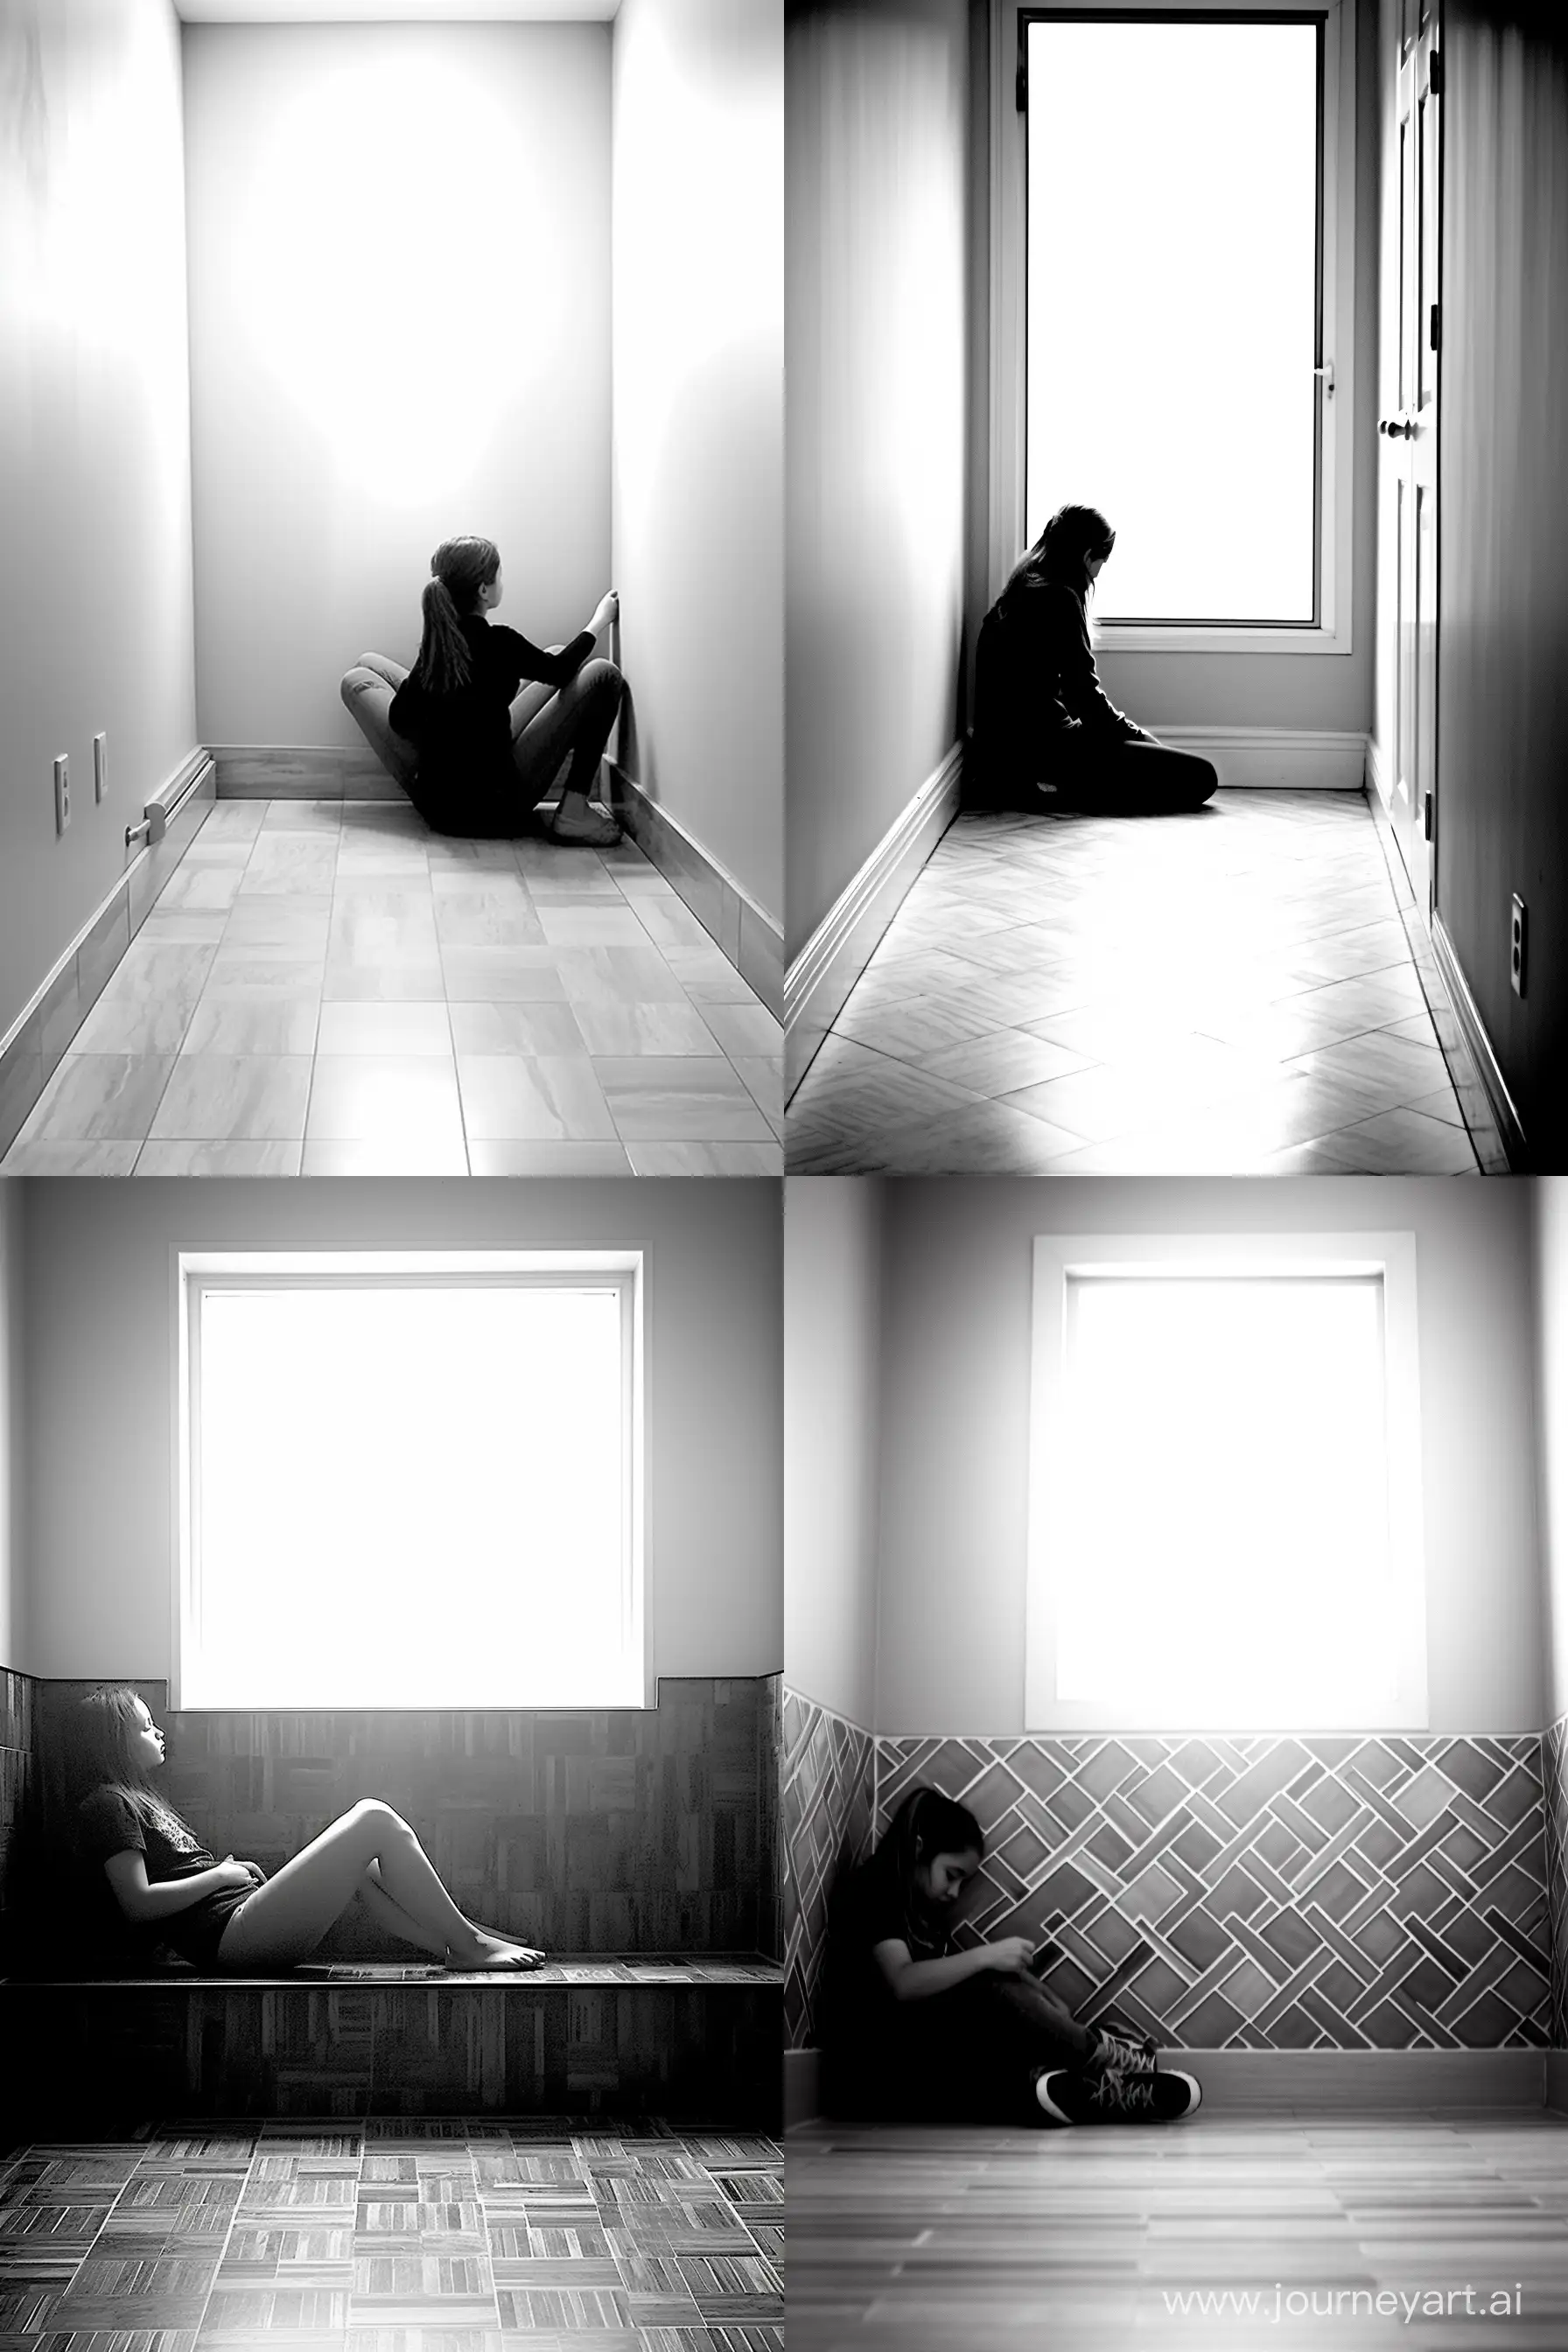 Disturbed-Young-Woman-in-Desolation-Haunting-BlackandWhite-Bathroom-Scene